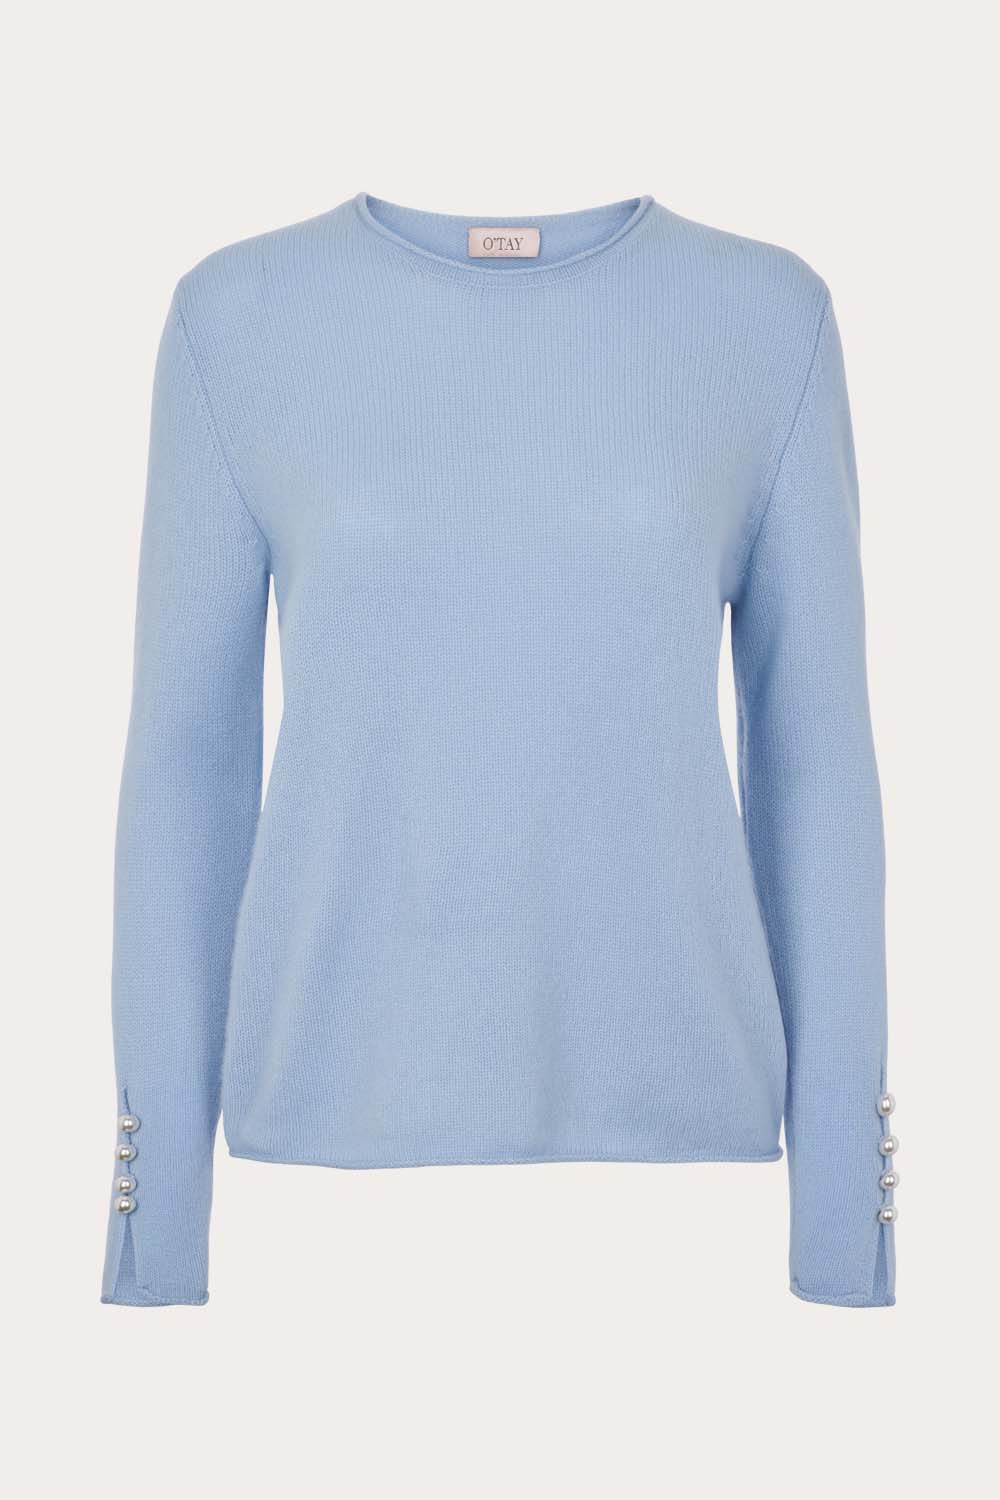 OTAY Abbelone Cashmere Sweater Sea Blue 1